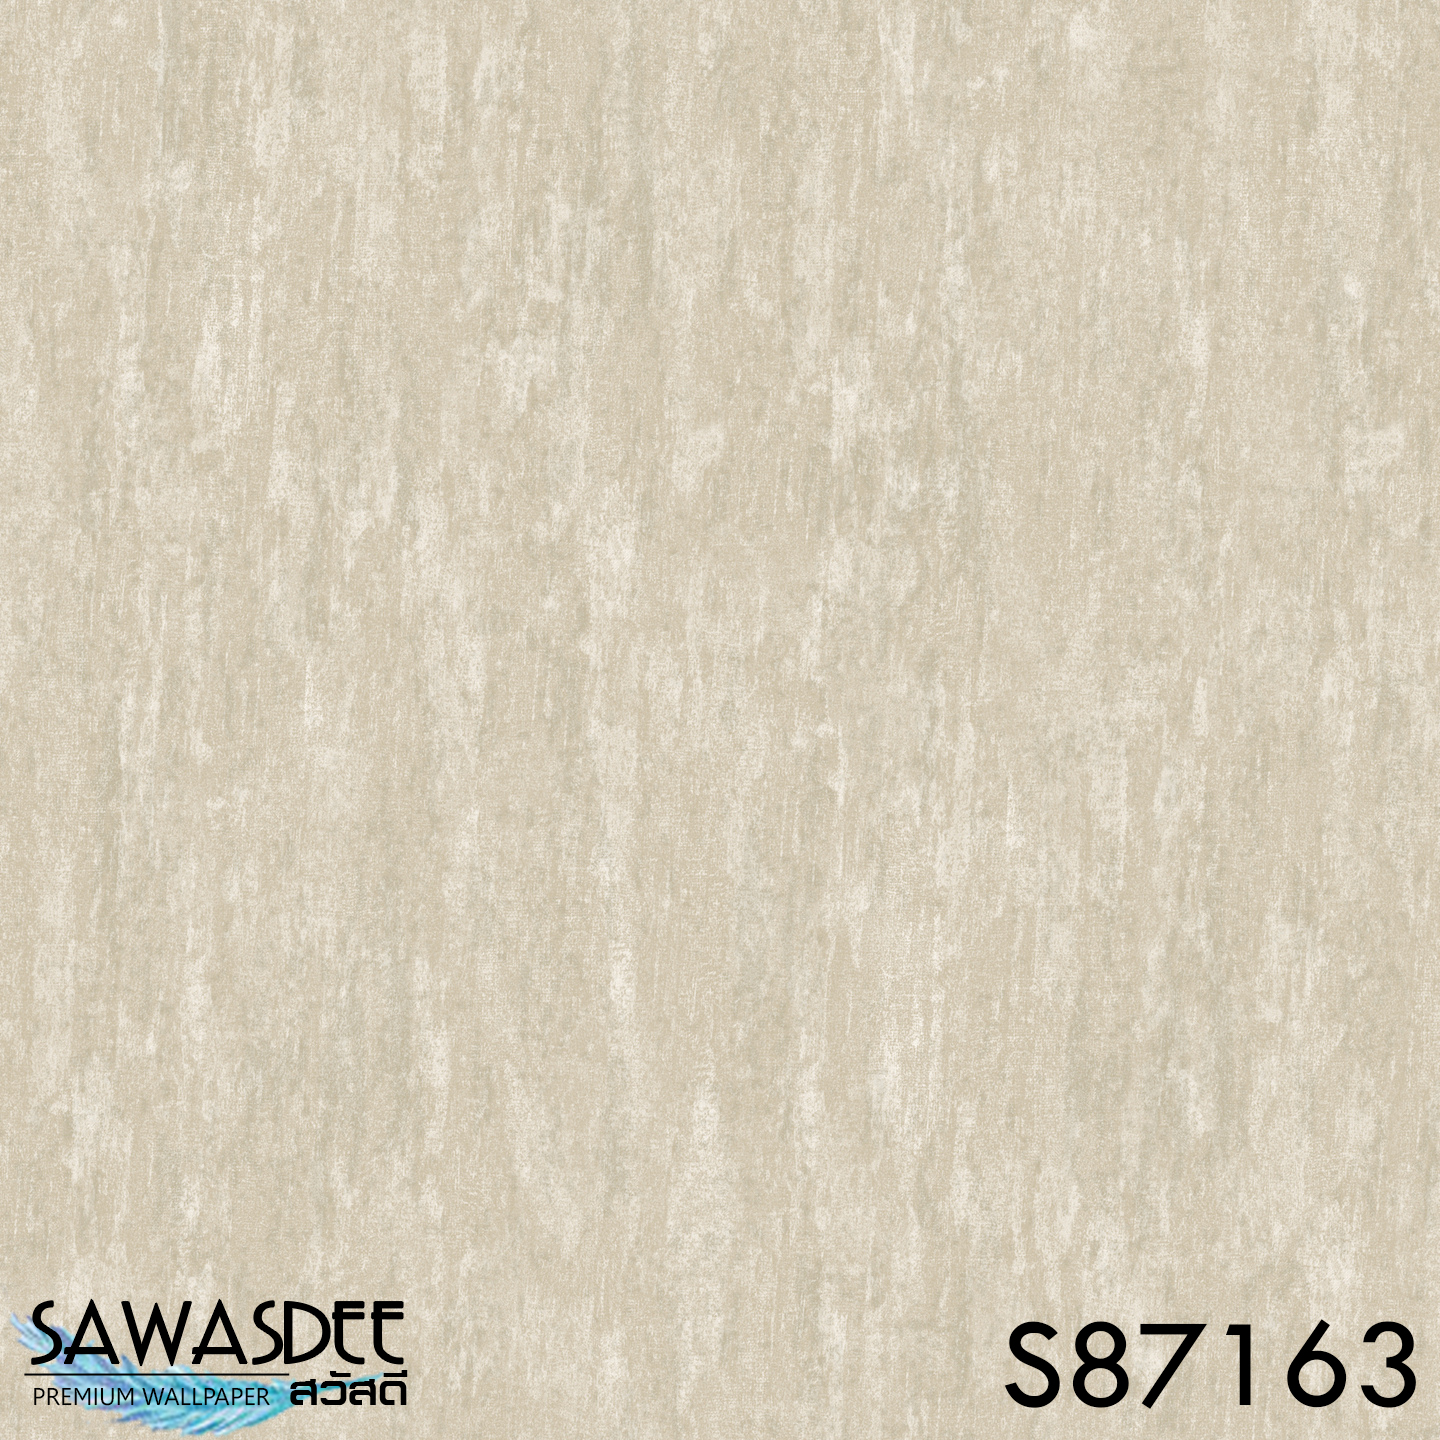 Wallpaper (SAWASDEE) S87163